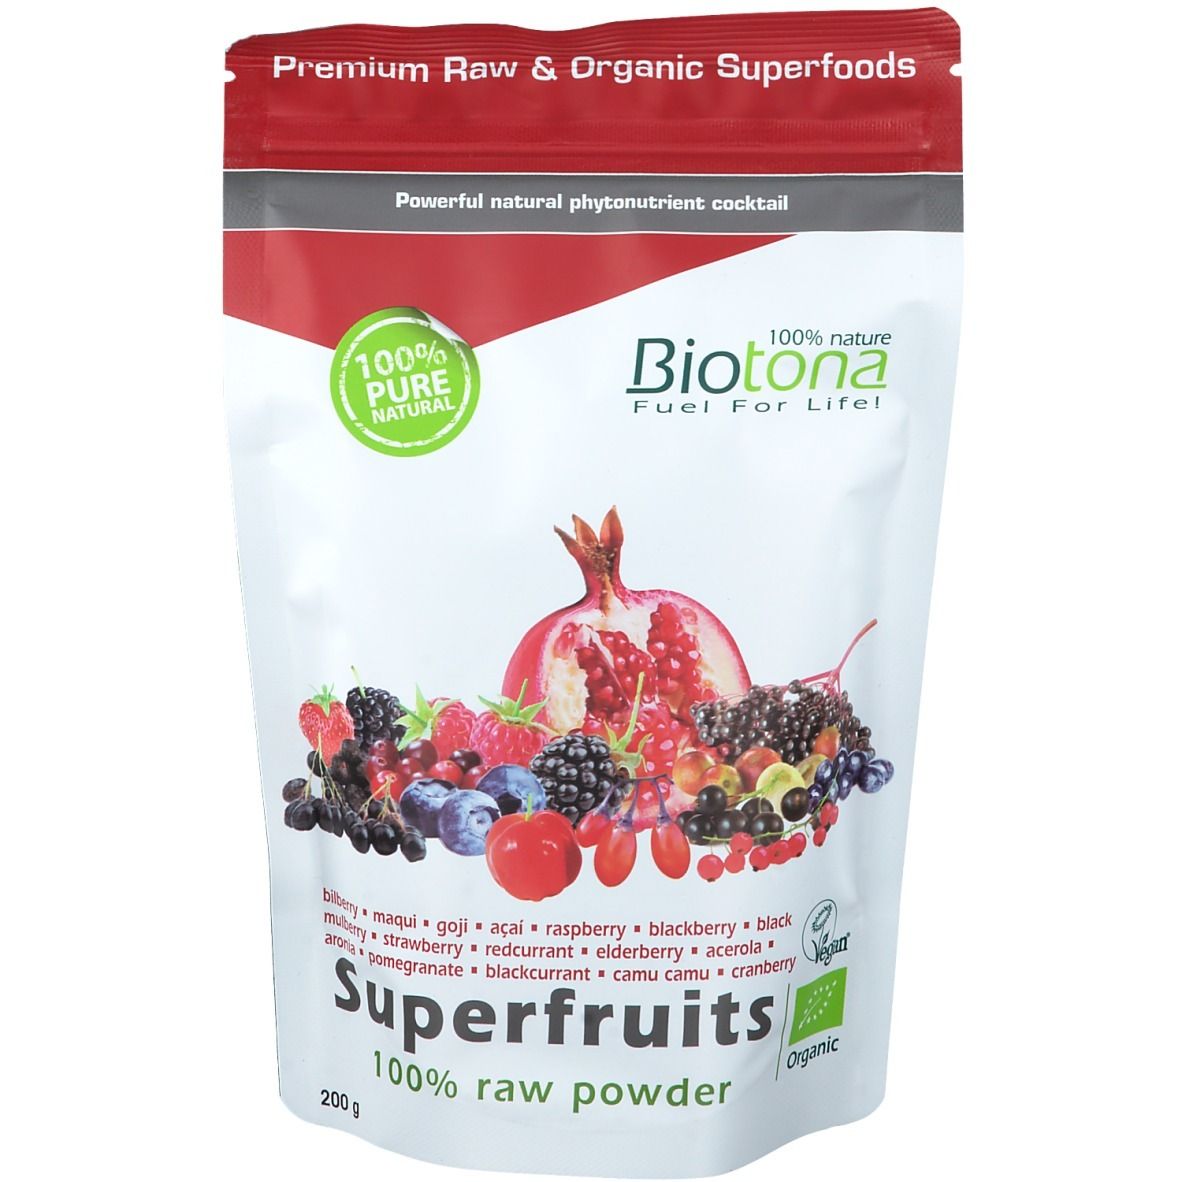 Biotona Superfruits Raw Powder